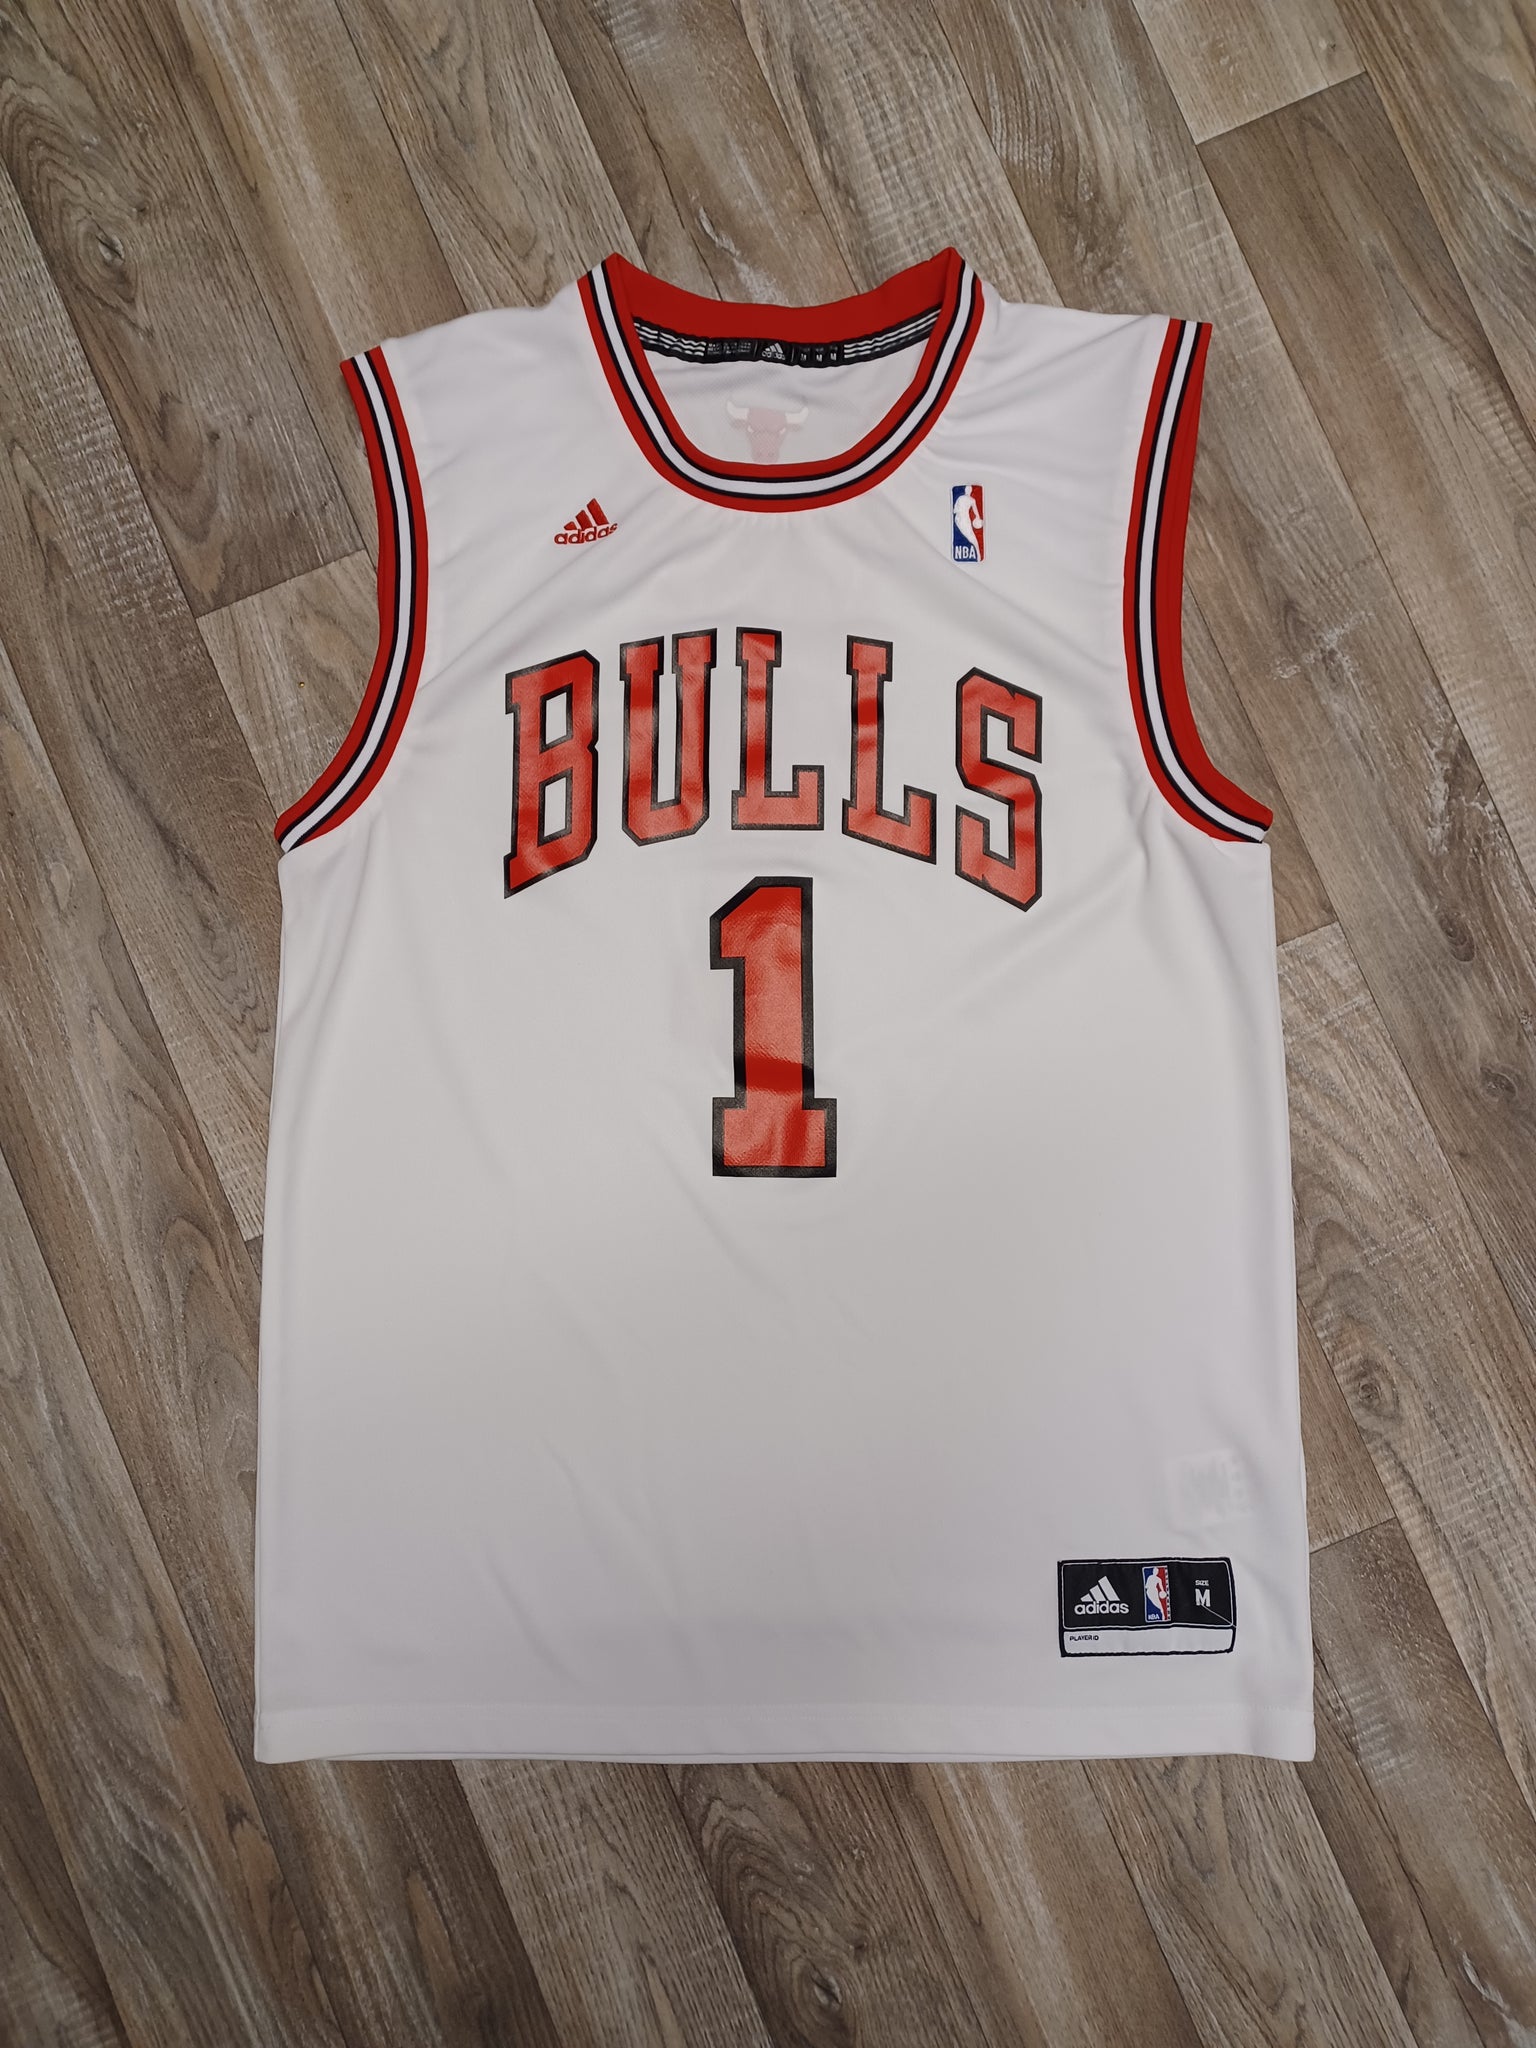 Authentic Vintage Adidas NBA Chicago Bulls Derrick Rose Basketball Jersey